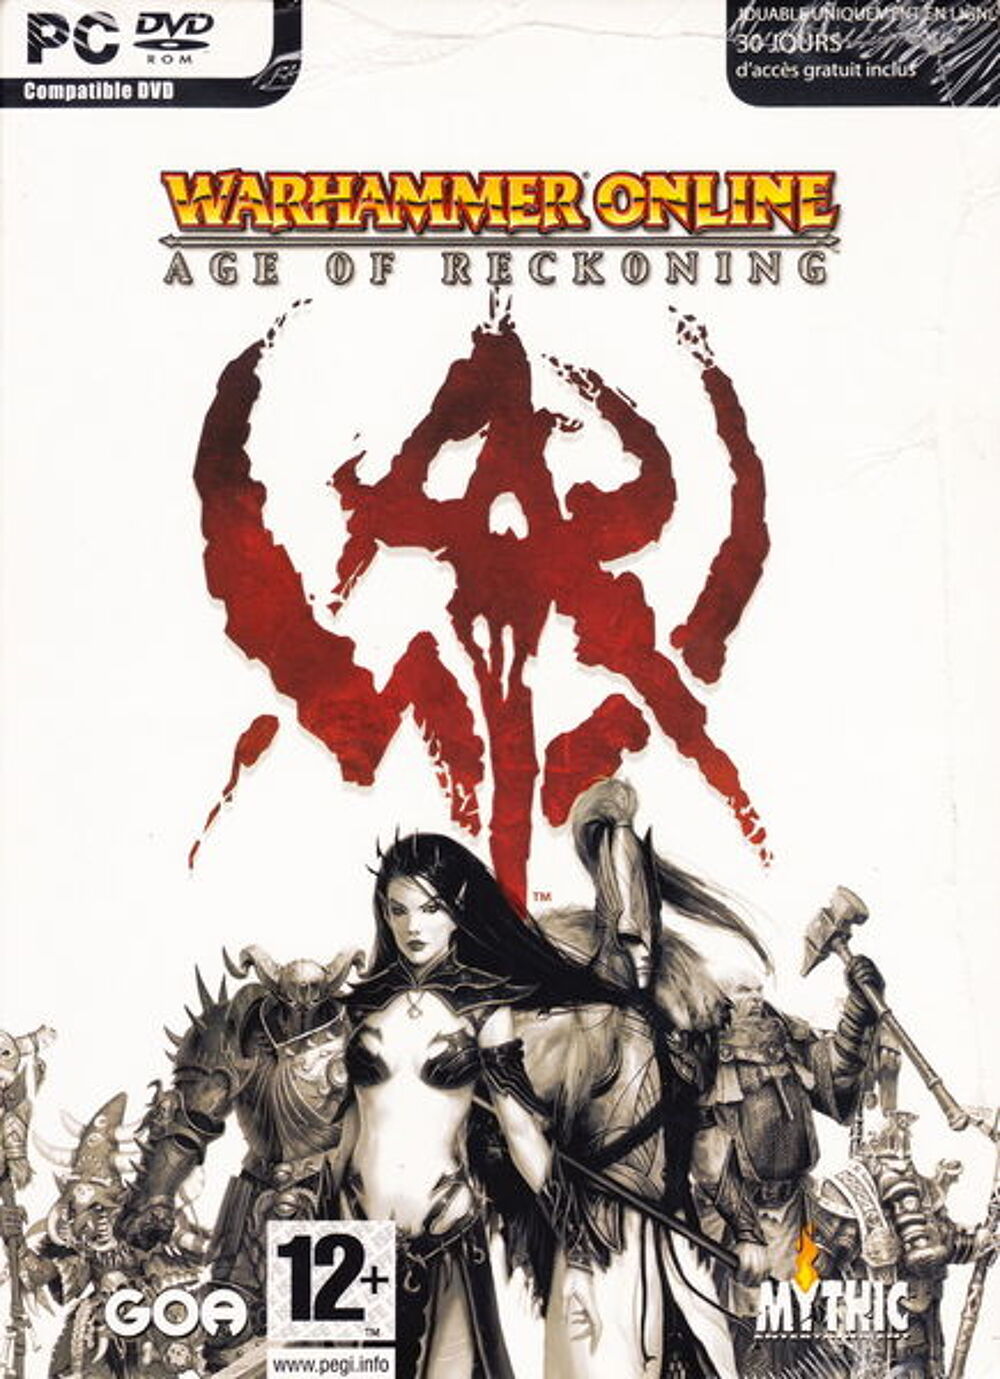 COFFRET DVD jeu PC Warhammer Online: Age of Reckoning NEUF
Consoles et jeux vidos